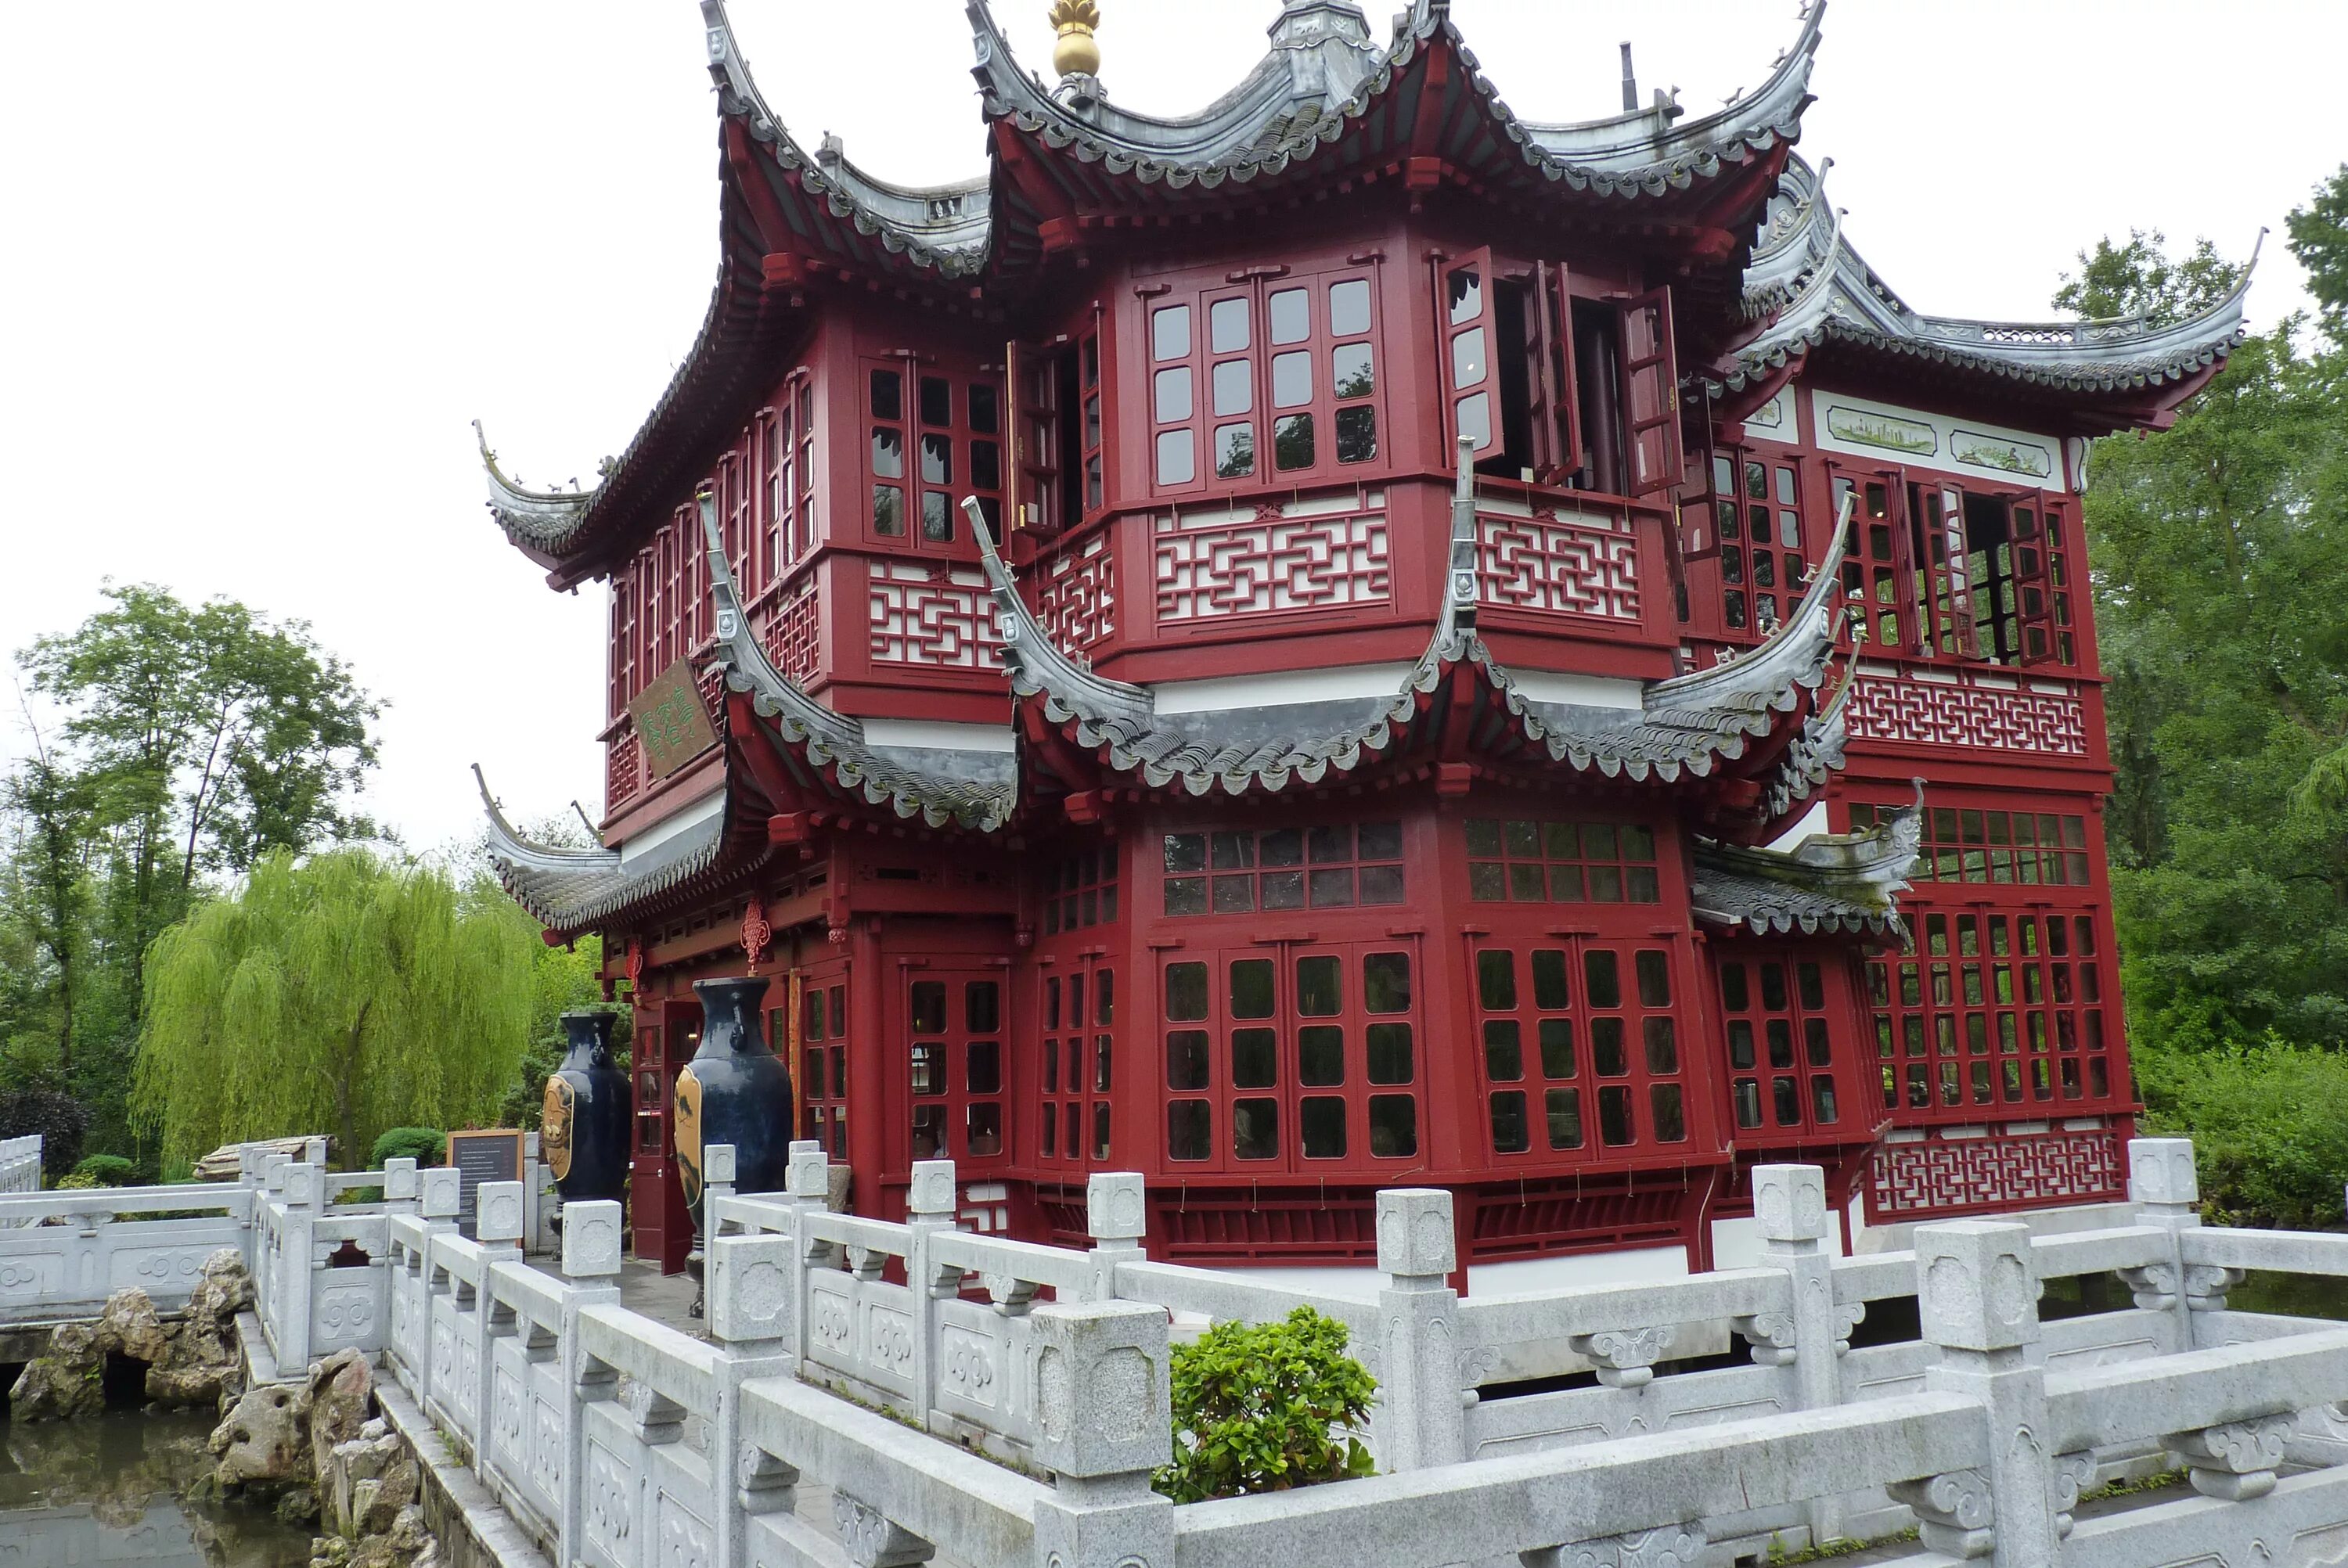 Xuande Hall чайный домик Китай. Пайри Дайза. Павильон Тай Китай. Китайский стиль в архитектуре.